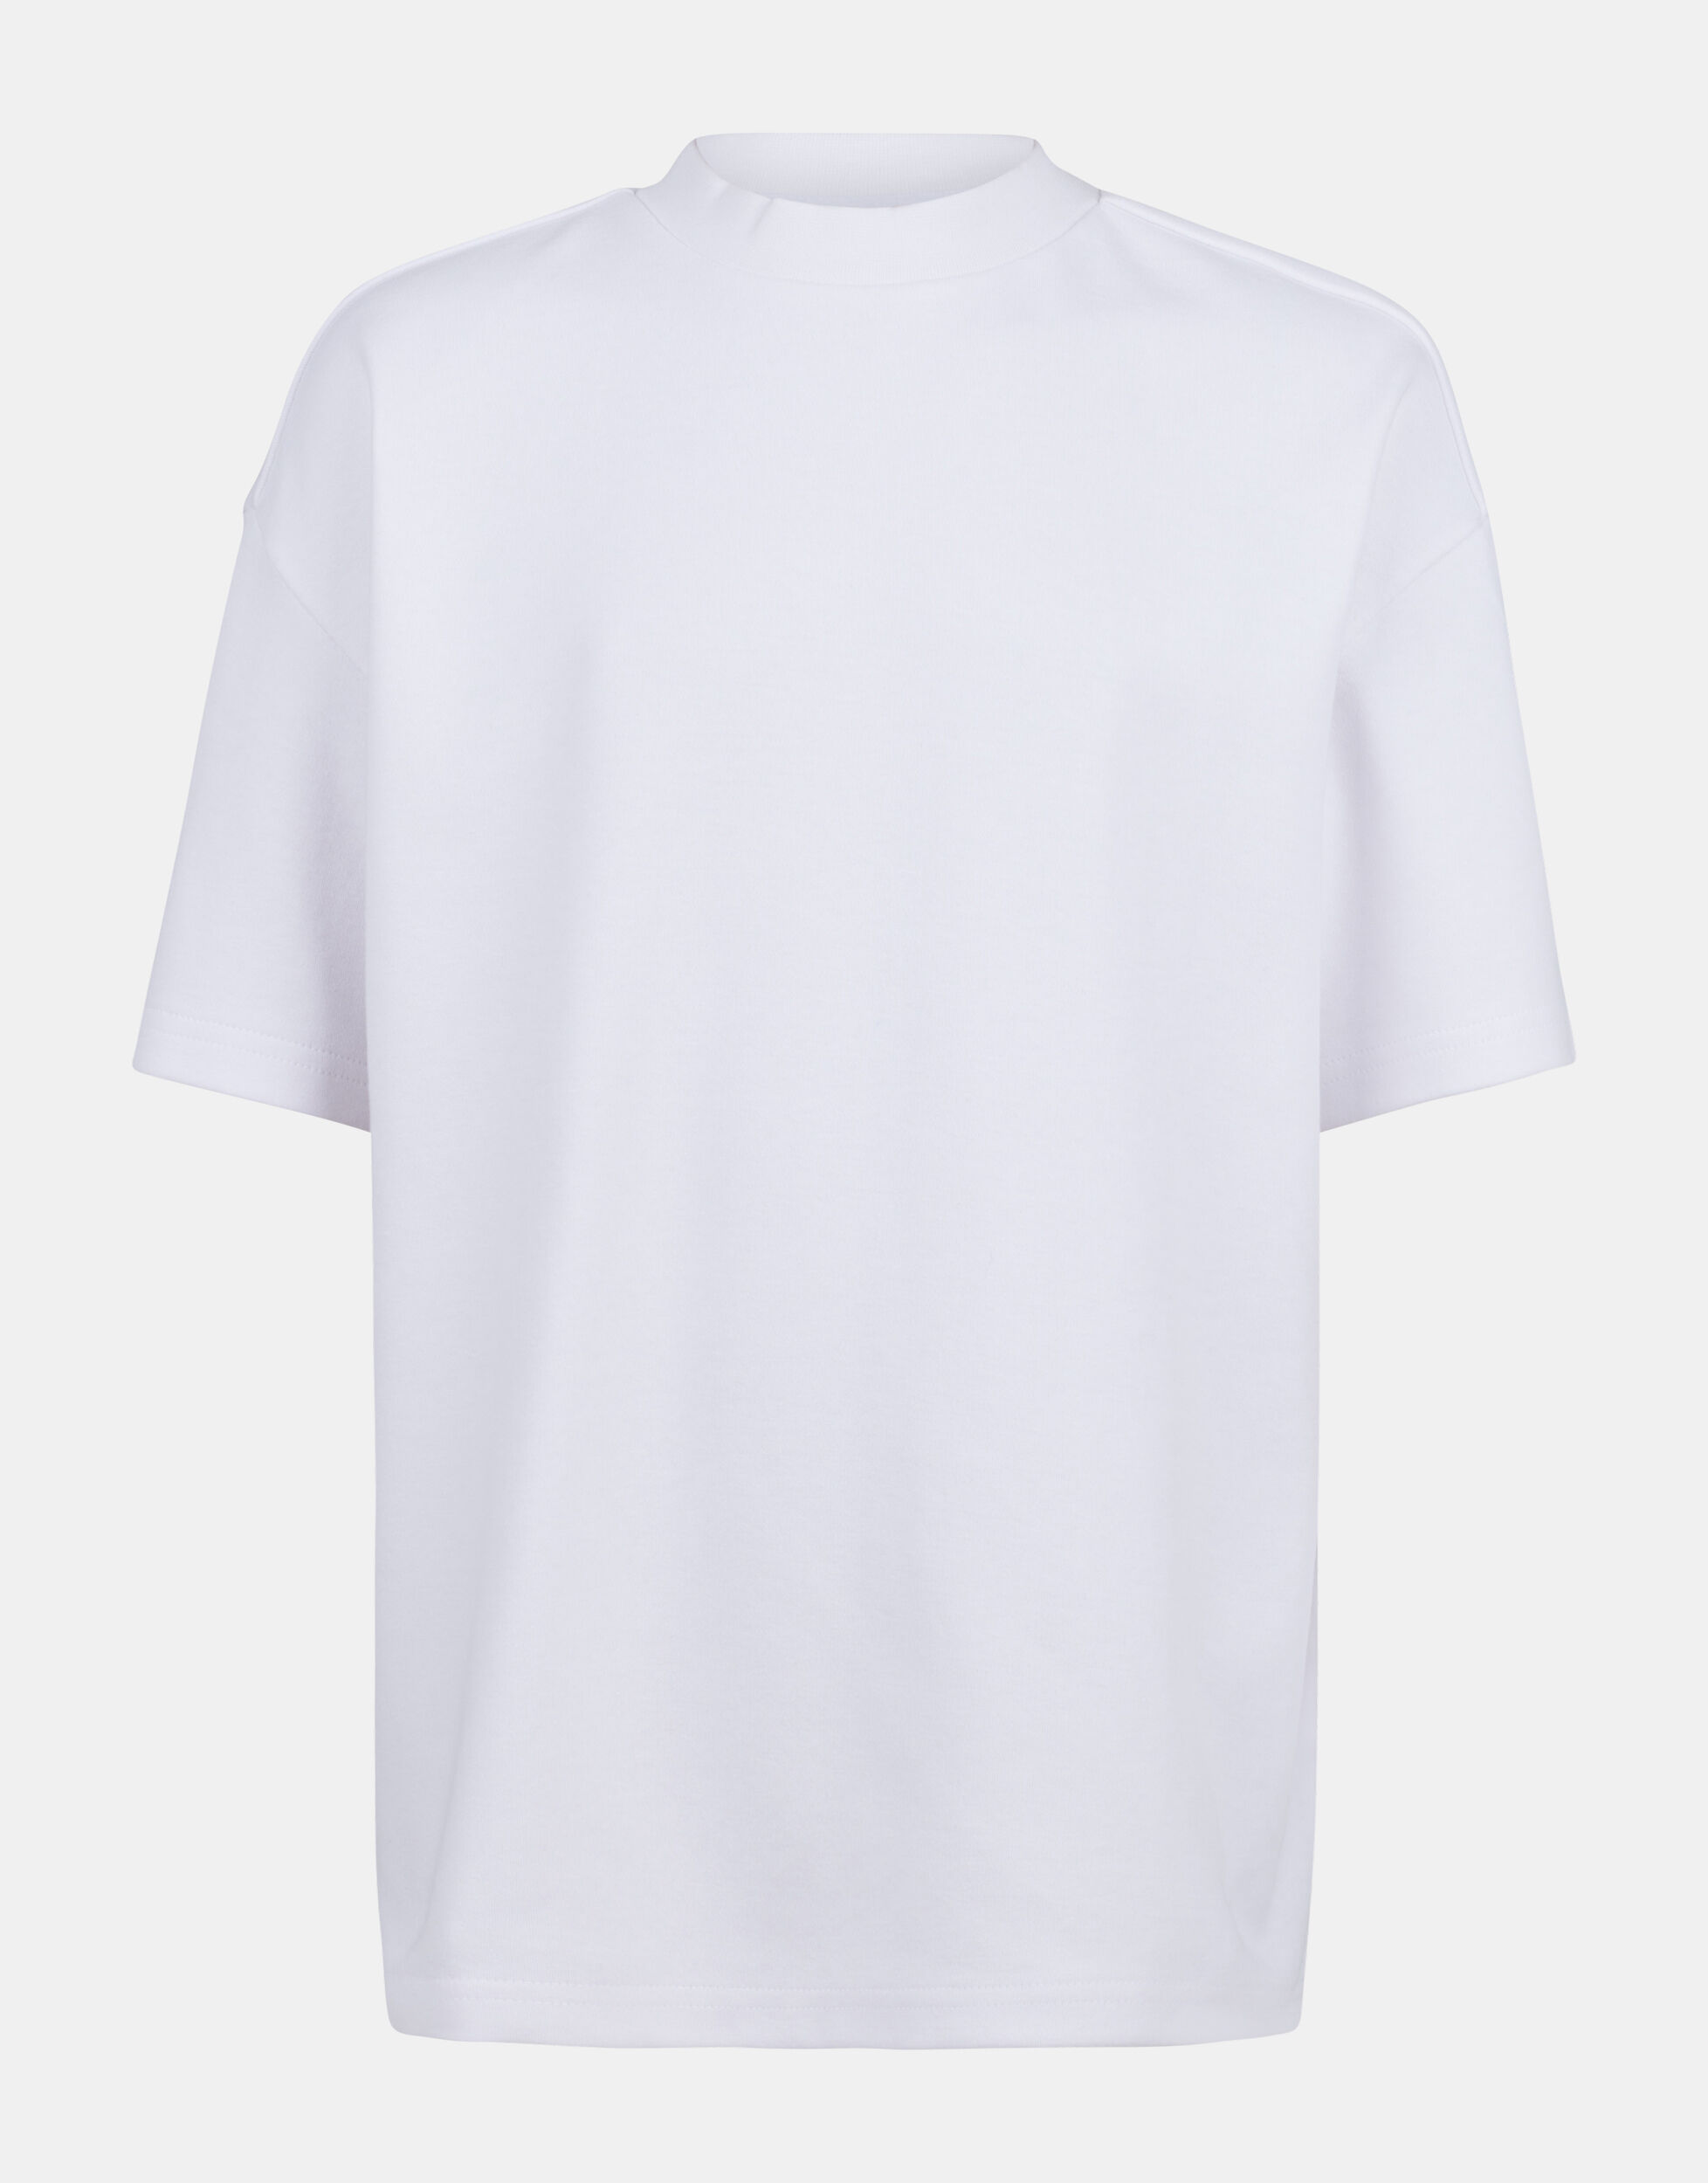 Omoda Jongens Kleding Tops & Shirts Shirts Poloshirts Zwarte T-shirt 22037110 